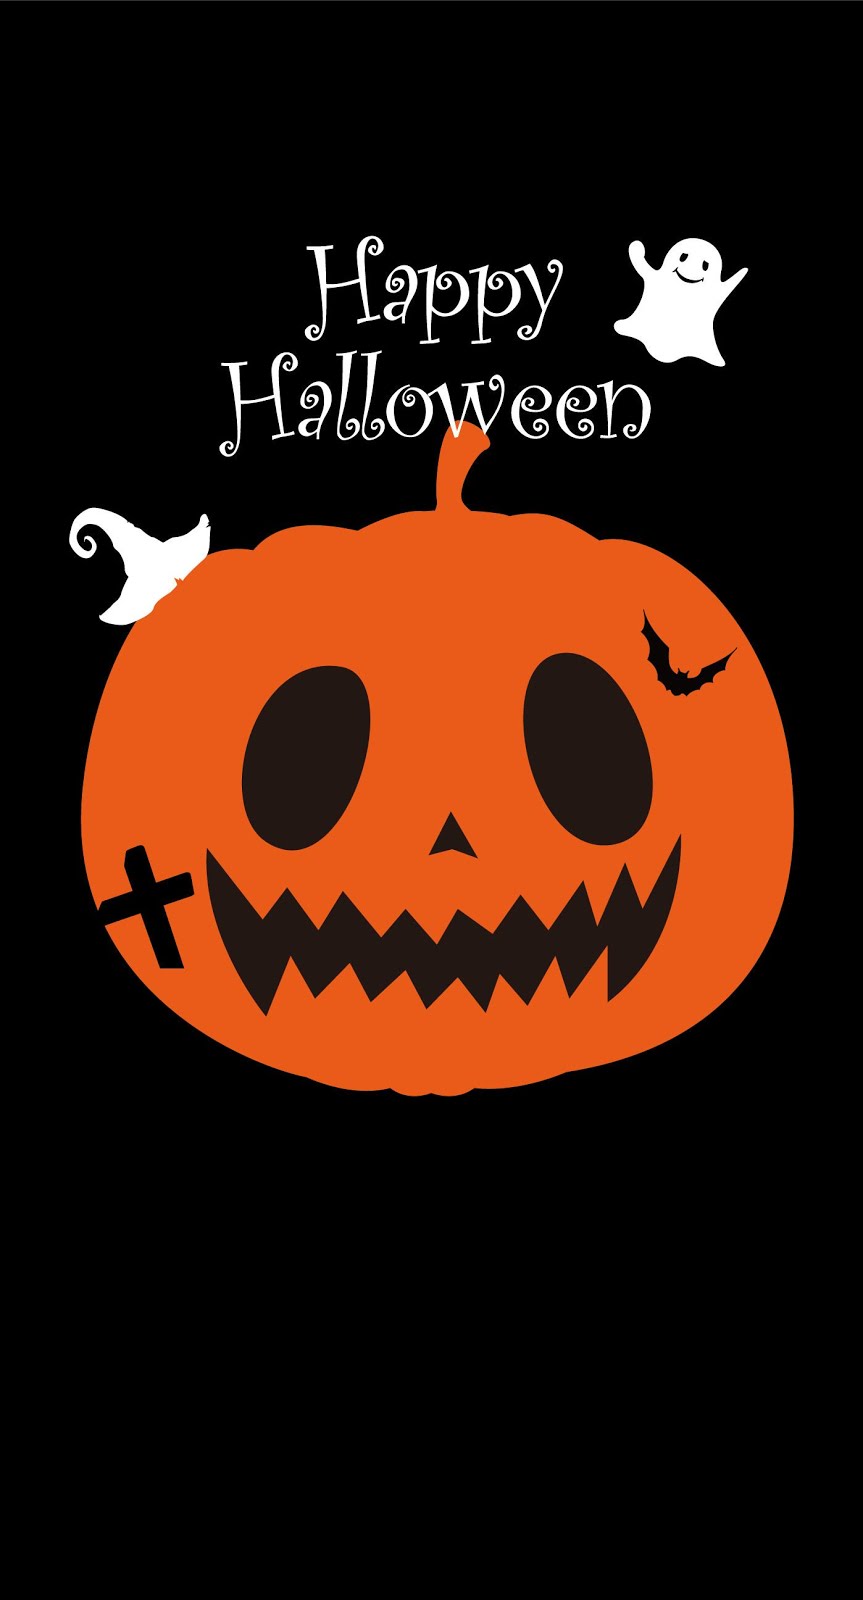 halloweendiy: 70+ Adult Halloween Party Ideas – Tips for Food, Games ...